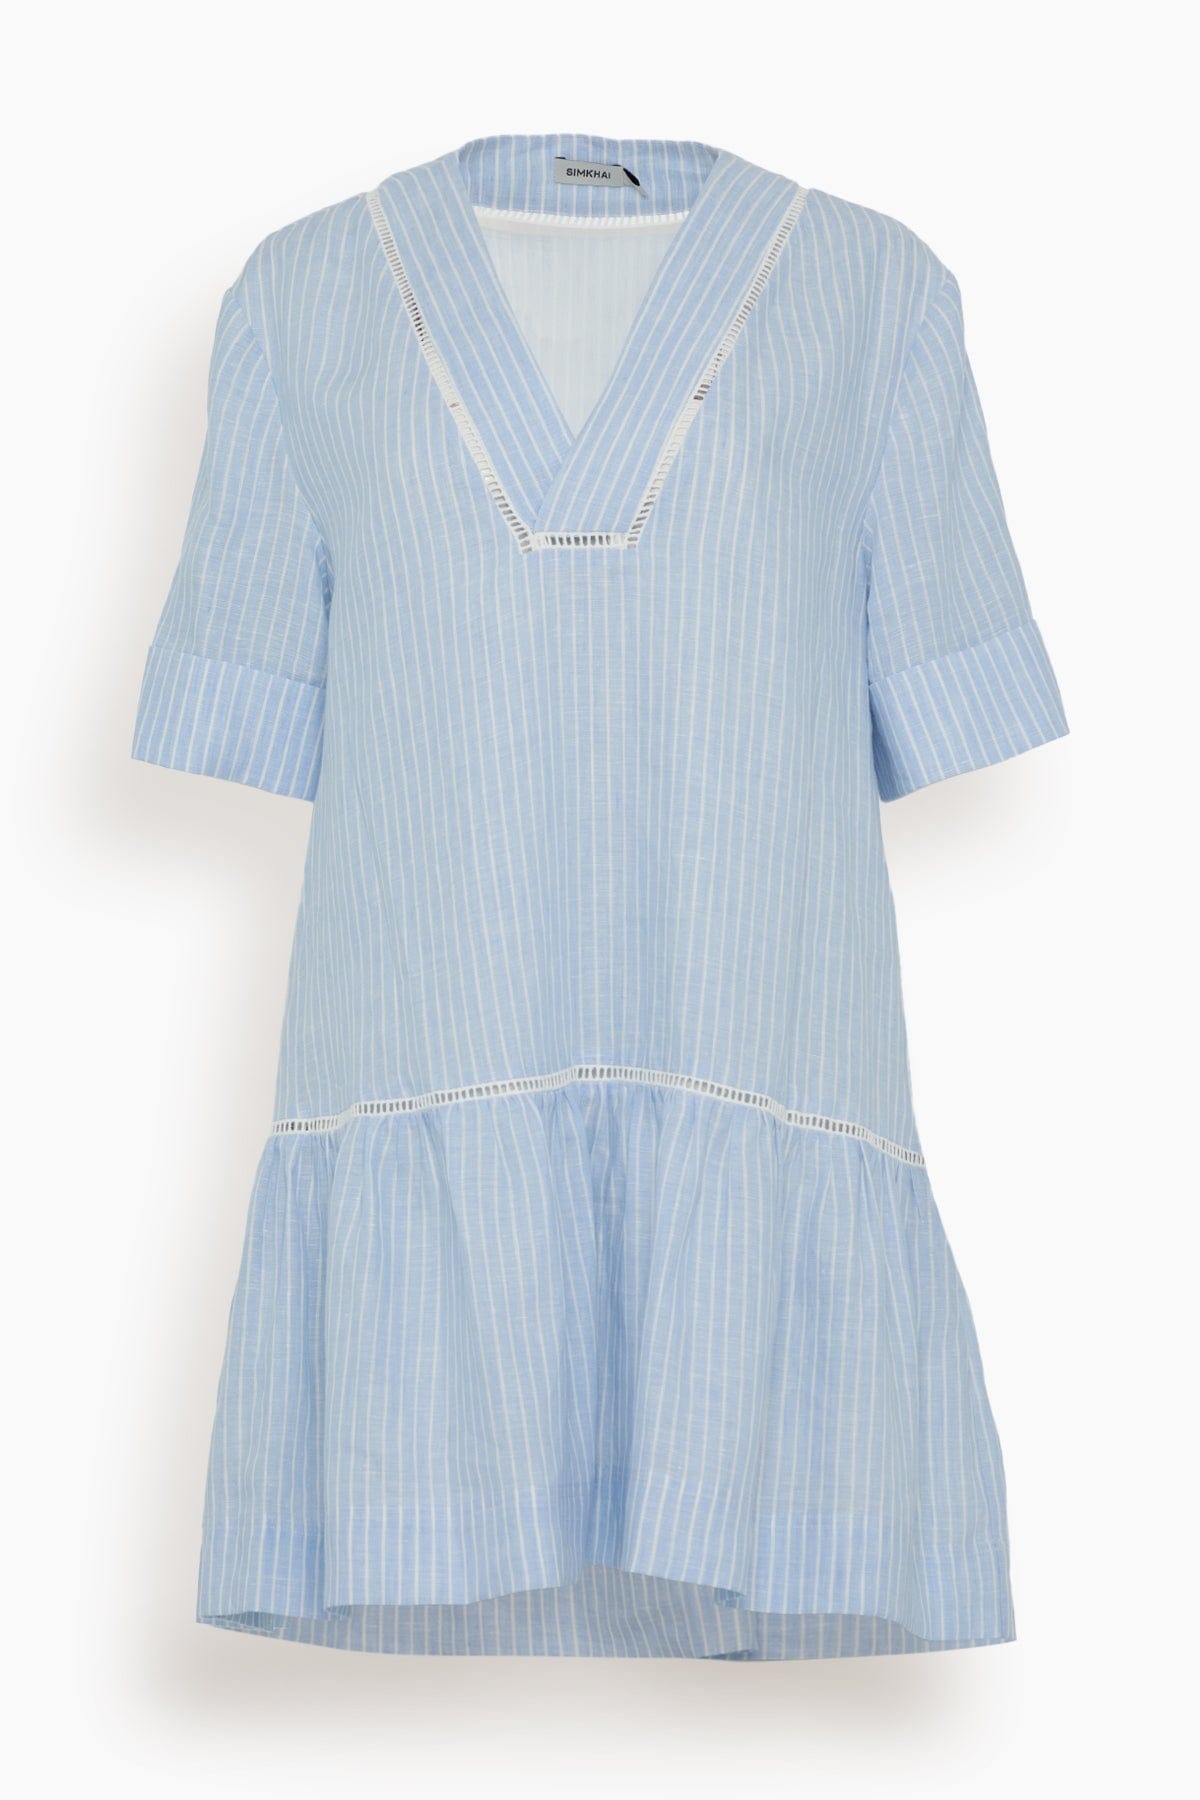 Jori Short Sleeve V-Neck Mini Dress in French Blue Stripe - 1